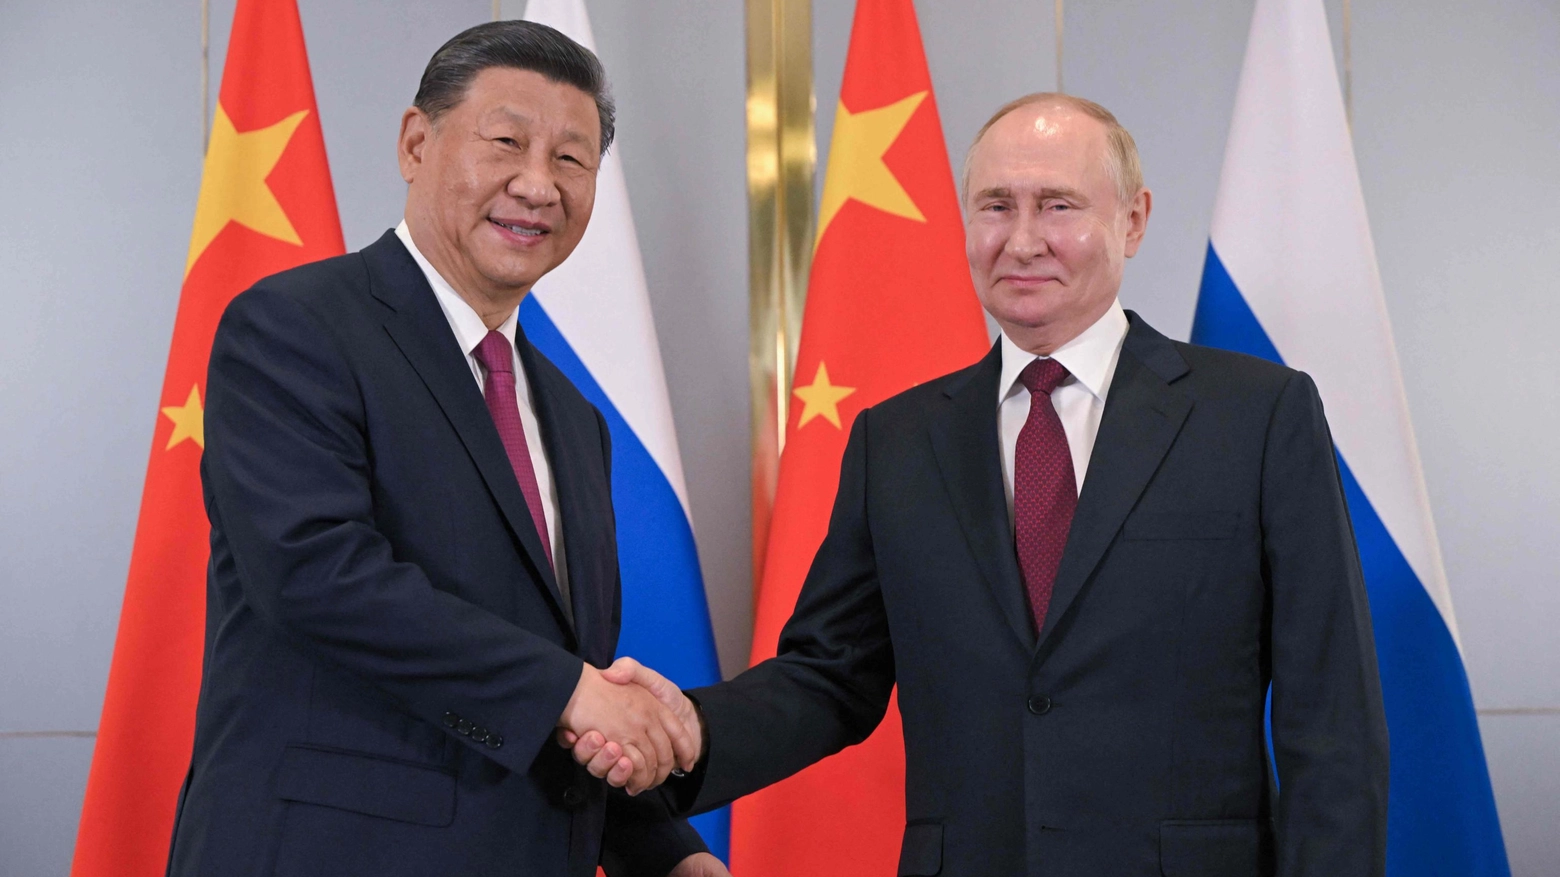 Putin con Xi al vertice di Astana (foto Ansa)